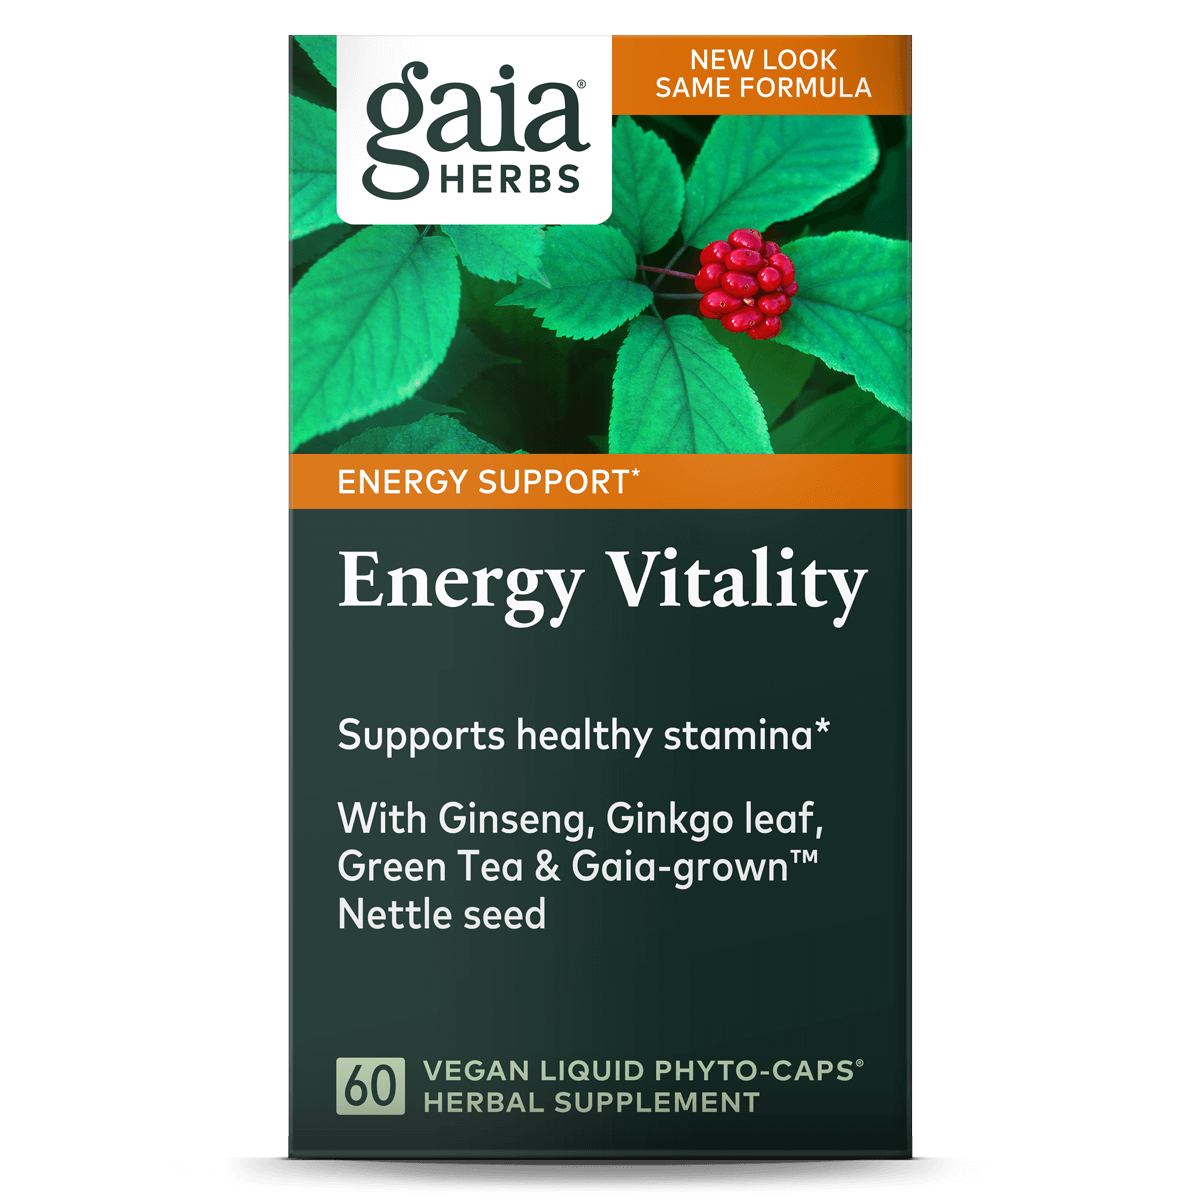 Gaia Herbs Energy Vitality label